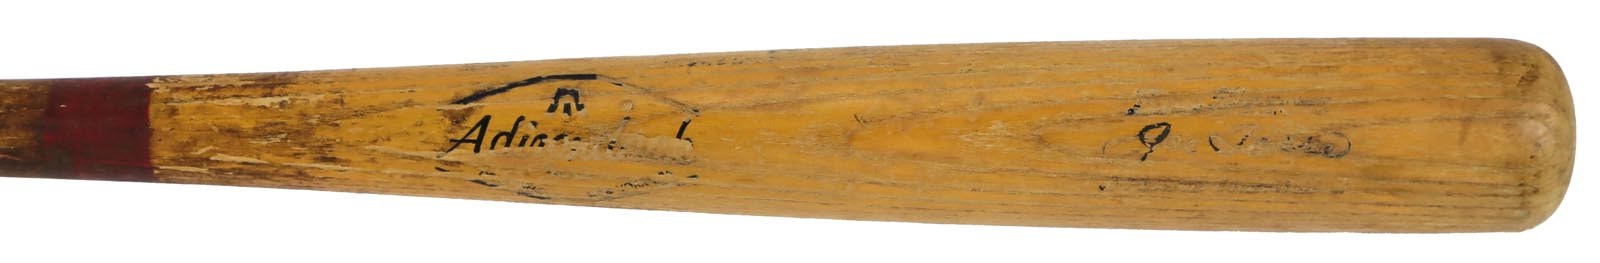 1968-70 Joe Torre Game Used Bat (Bernie Stowe Collection)